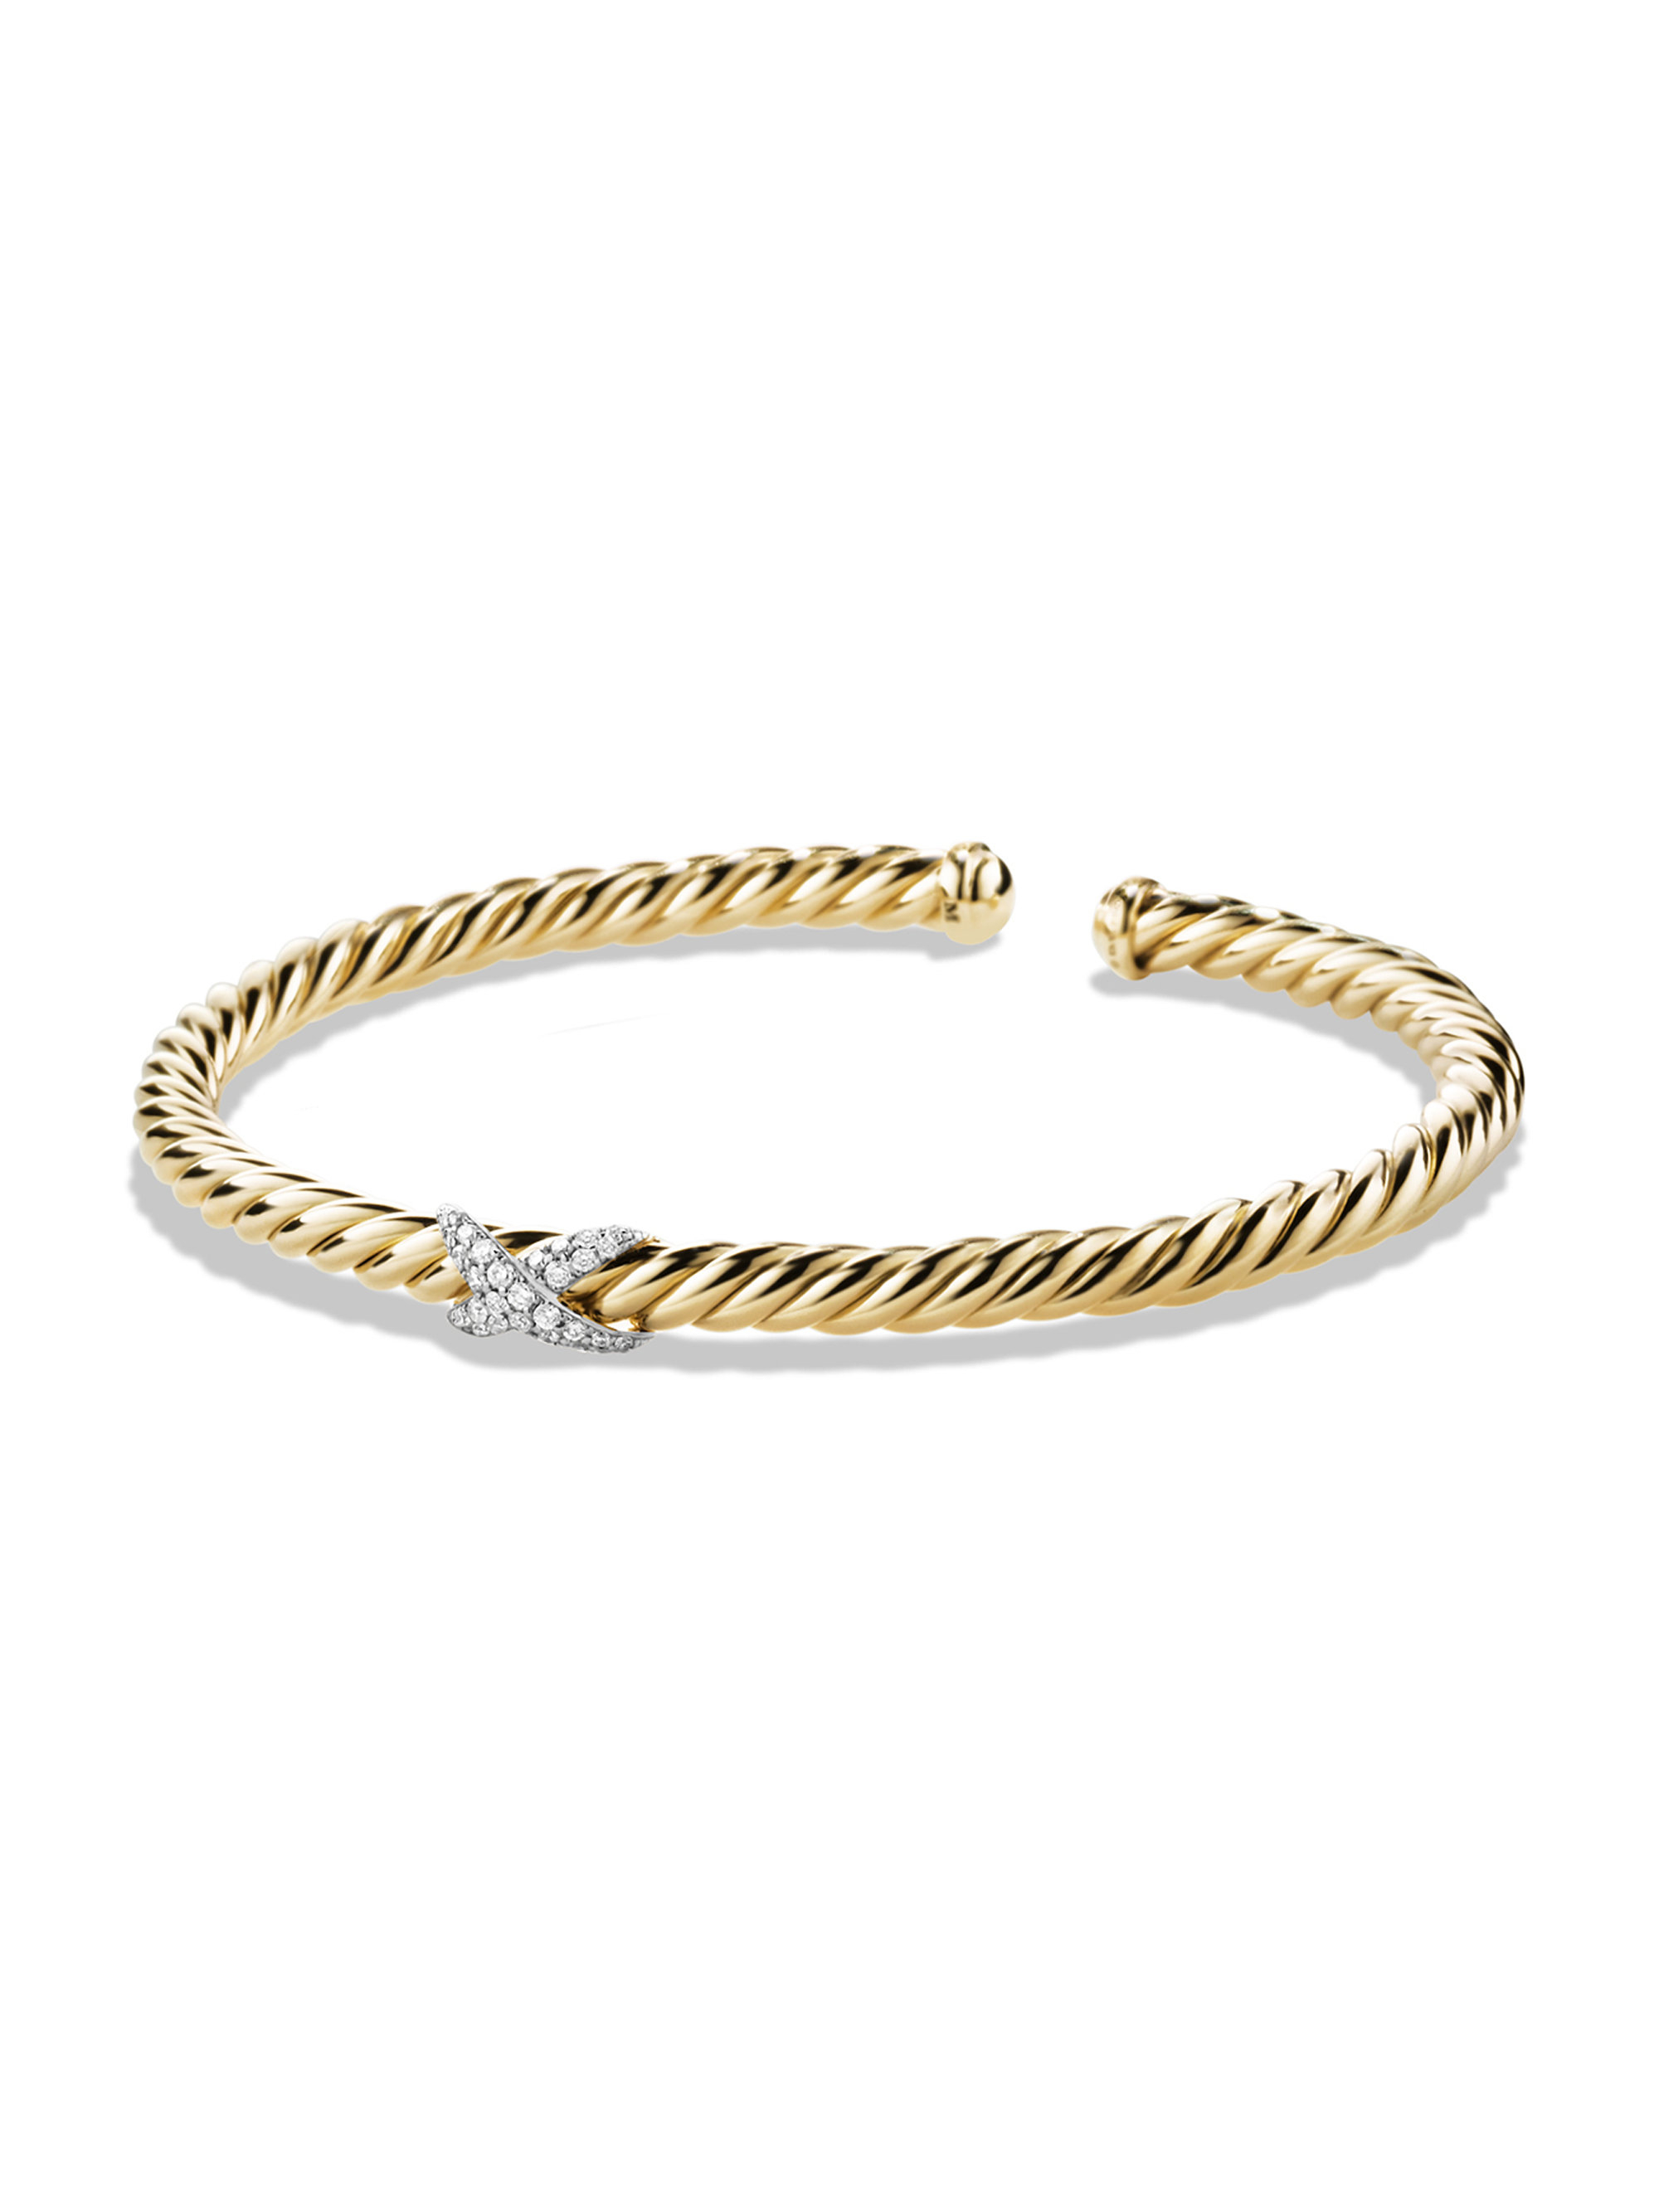 David yurman X Bracelet With Diamonds In 18k Gold in Metallic - Save 22 ...